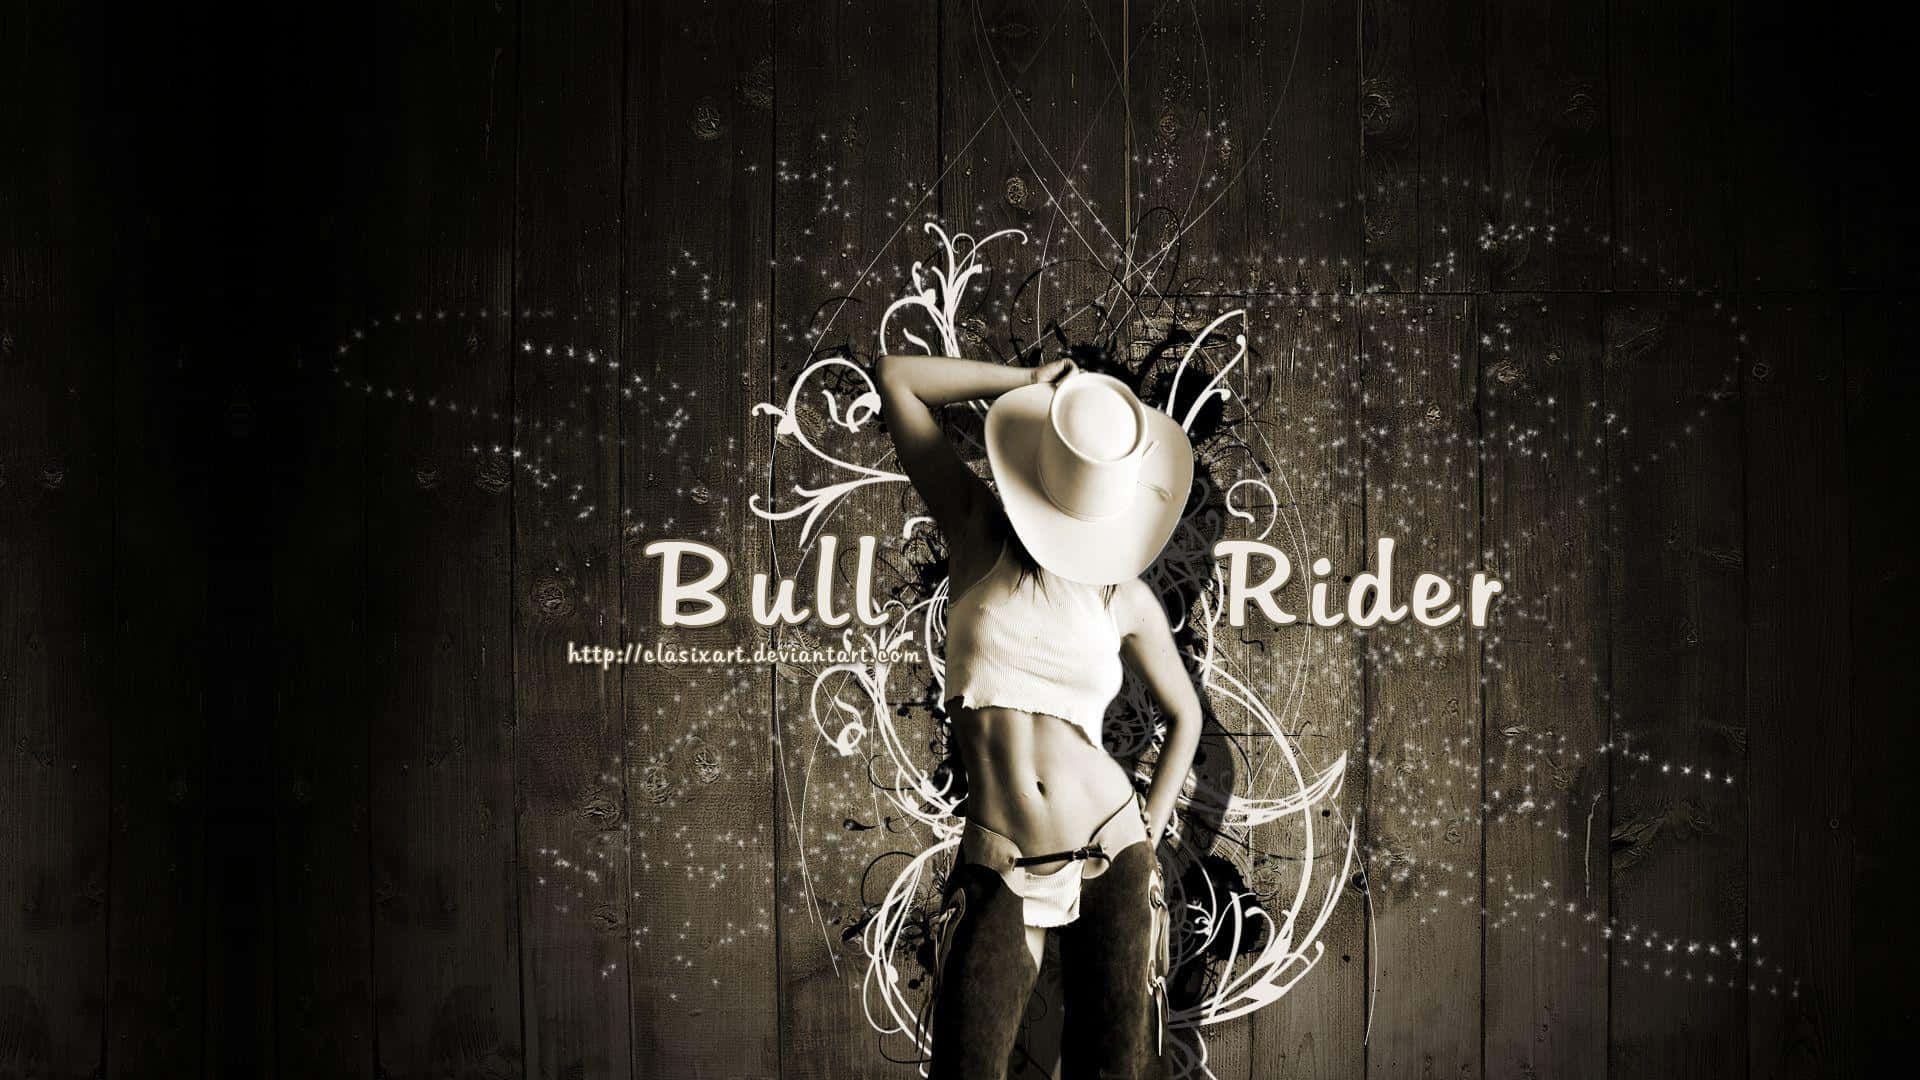 Professional bull rider showcasing his daring tricks